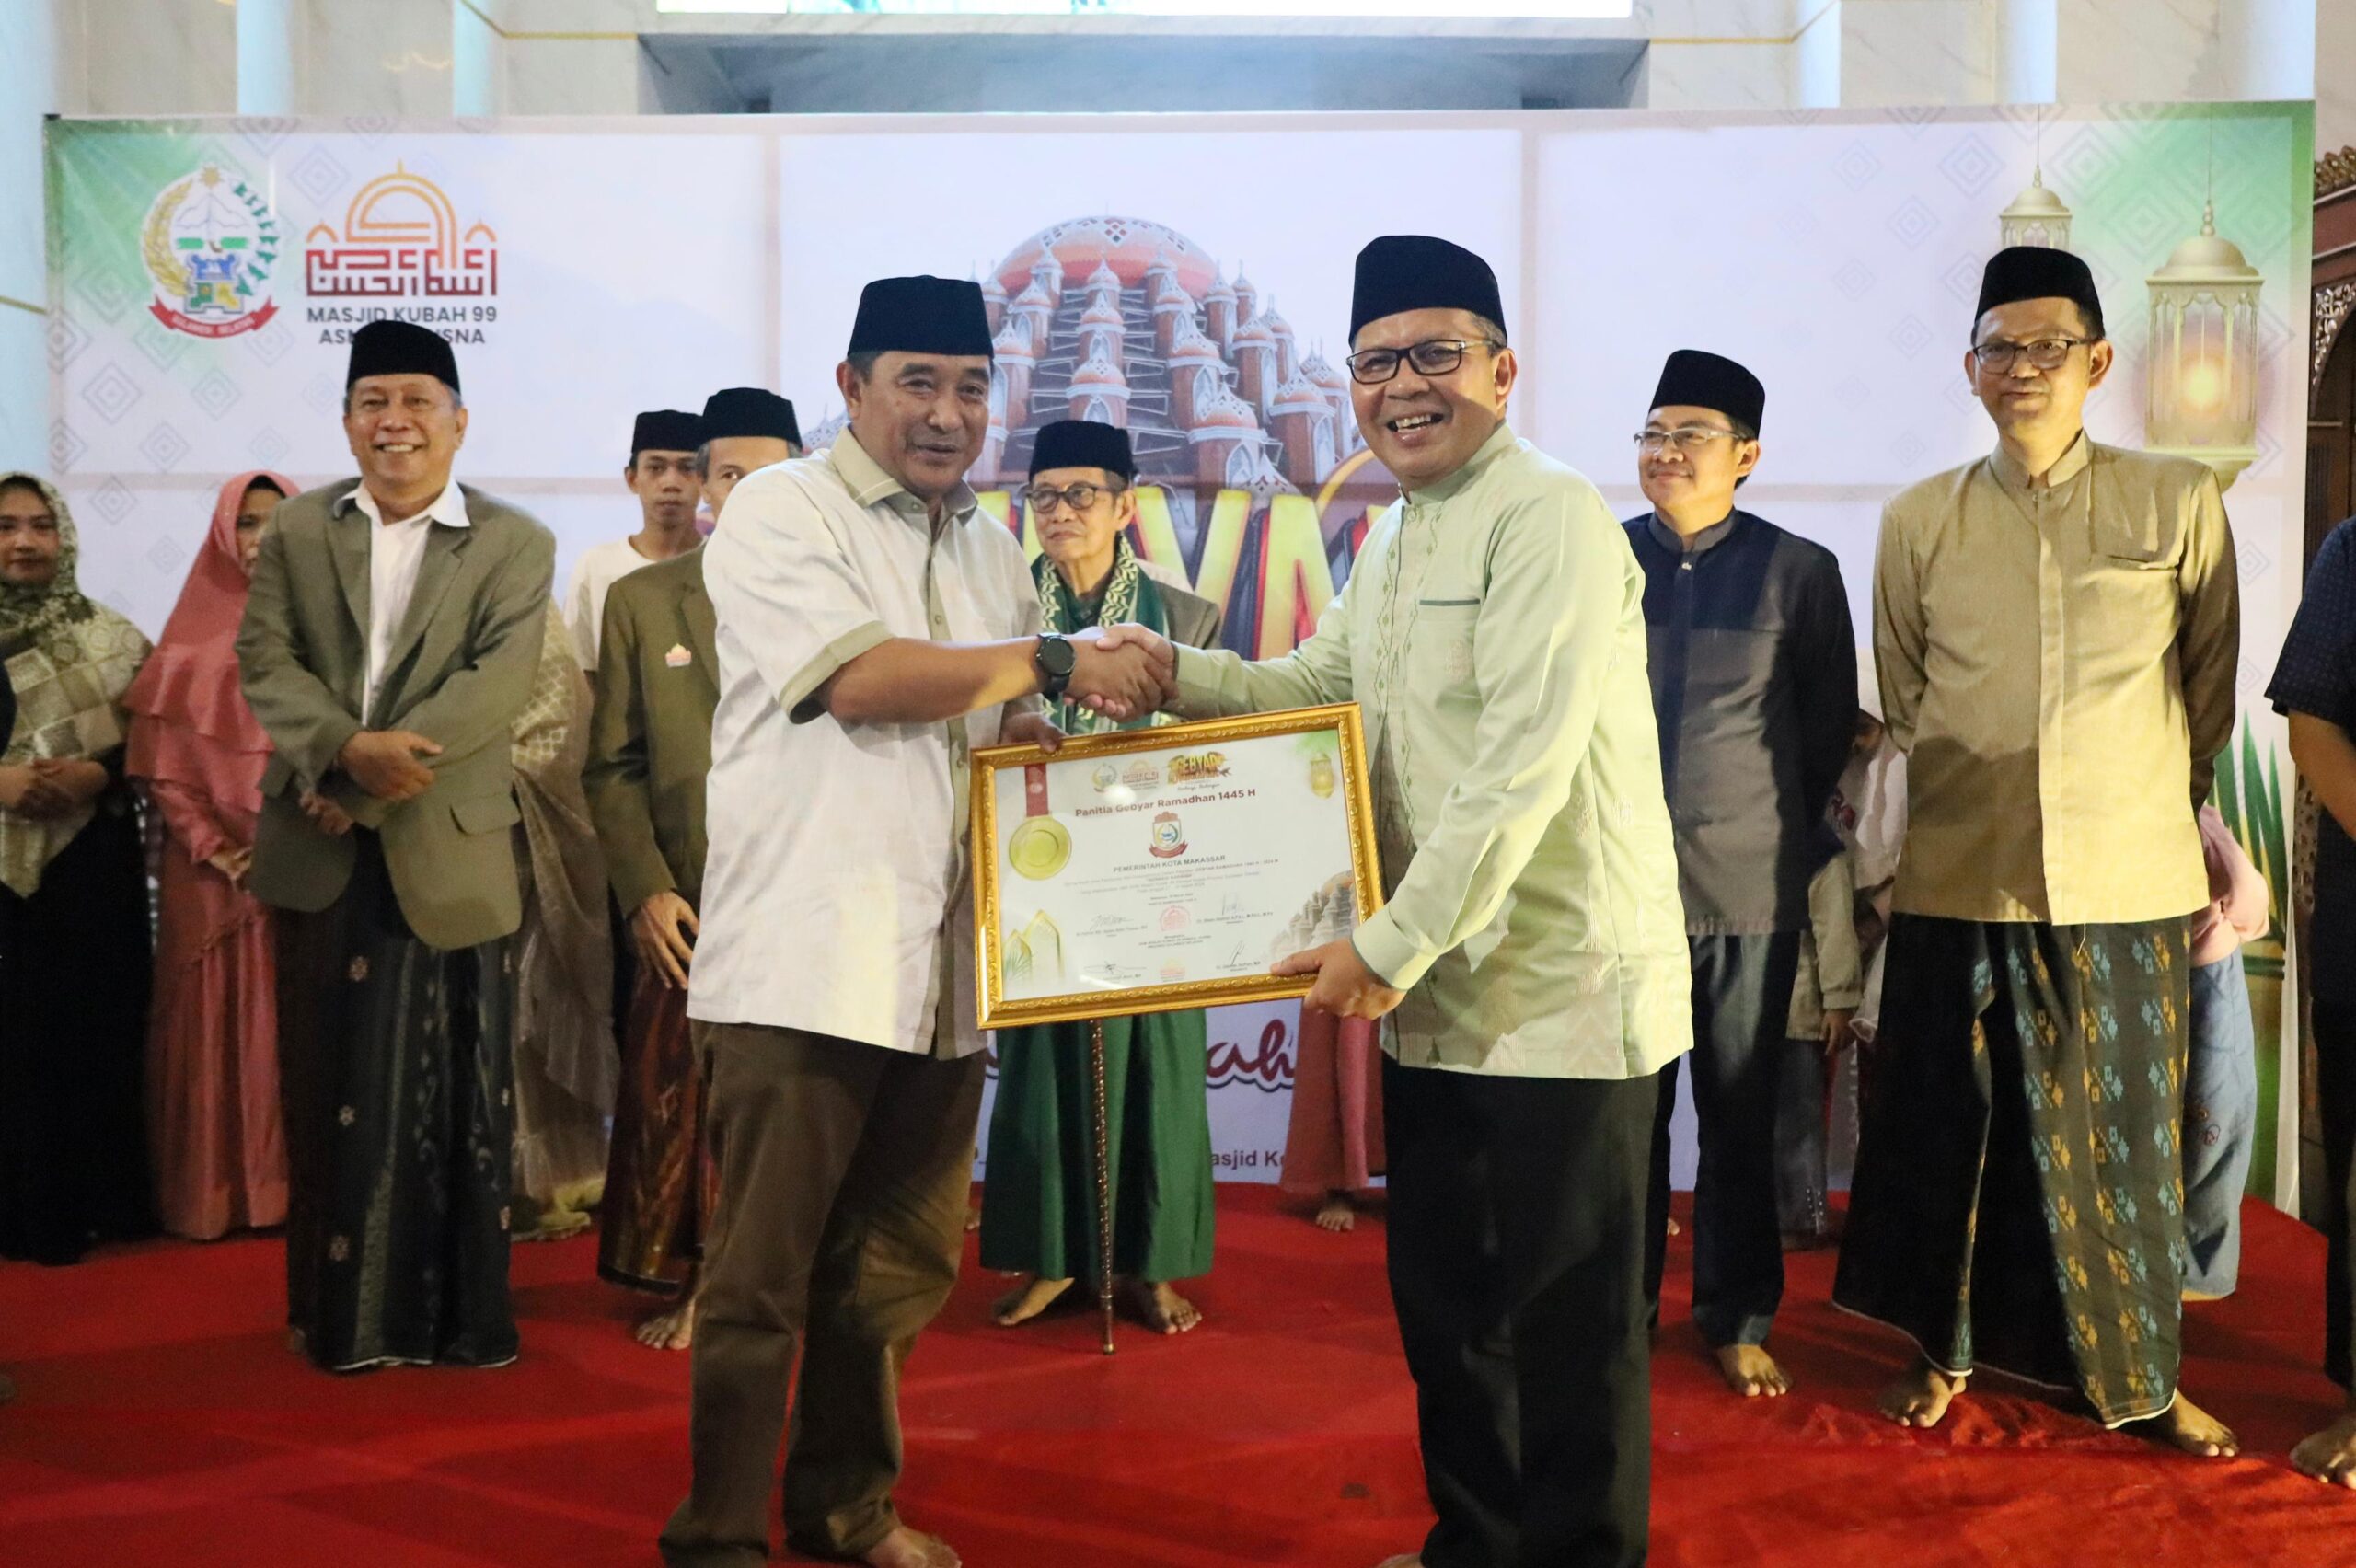 Pj Gubernur Bahtiar dan Danny Pomanto Hadiri Peringatan Nuzulul Qur’an di Masjid Kubah 99 Asmaul Husna